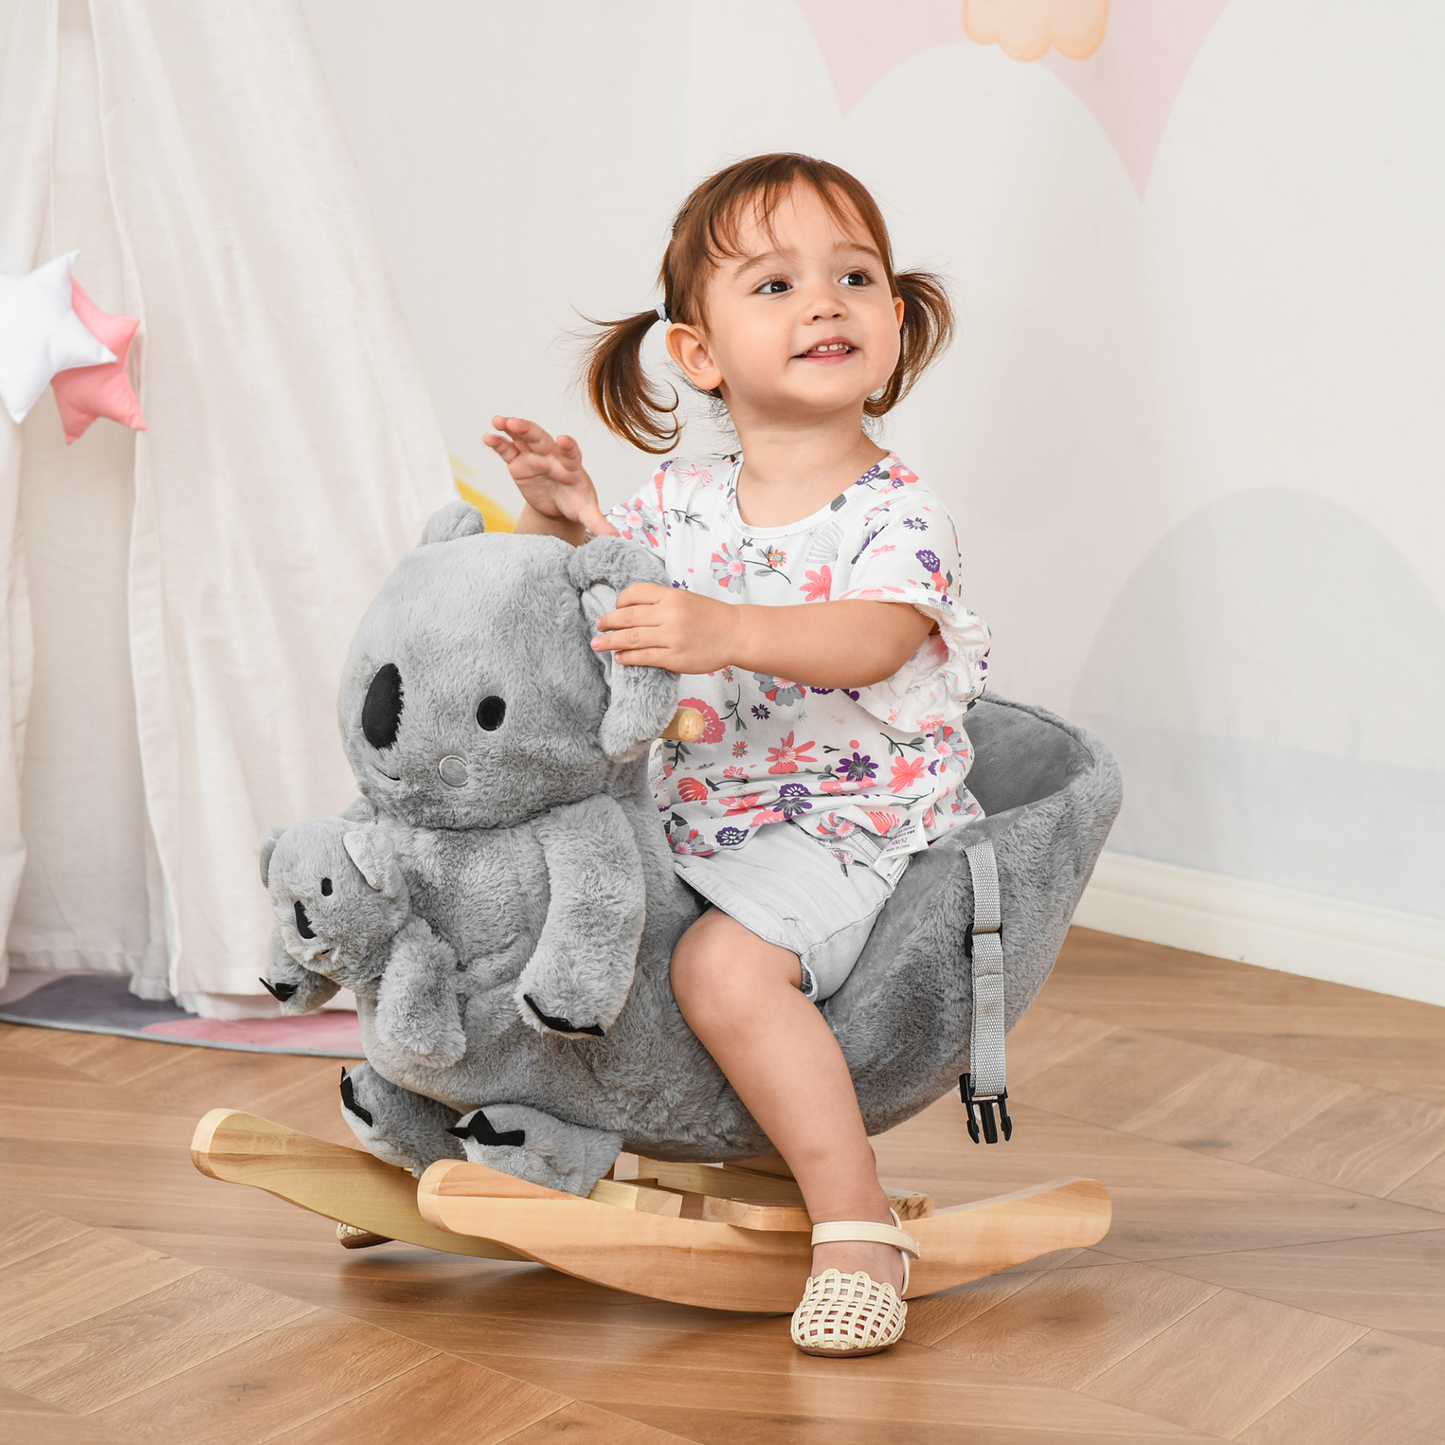 HOMCOM Kids Toddler Rocking Horse Plush Ride On Koala Rocker Wooden Base Seat Safety Belt w/ Gloved Doll Toy for 18-36 Months Grey